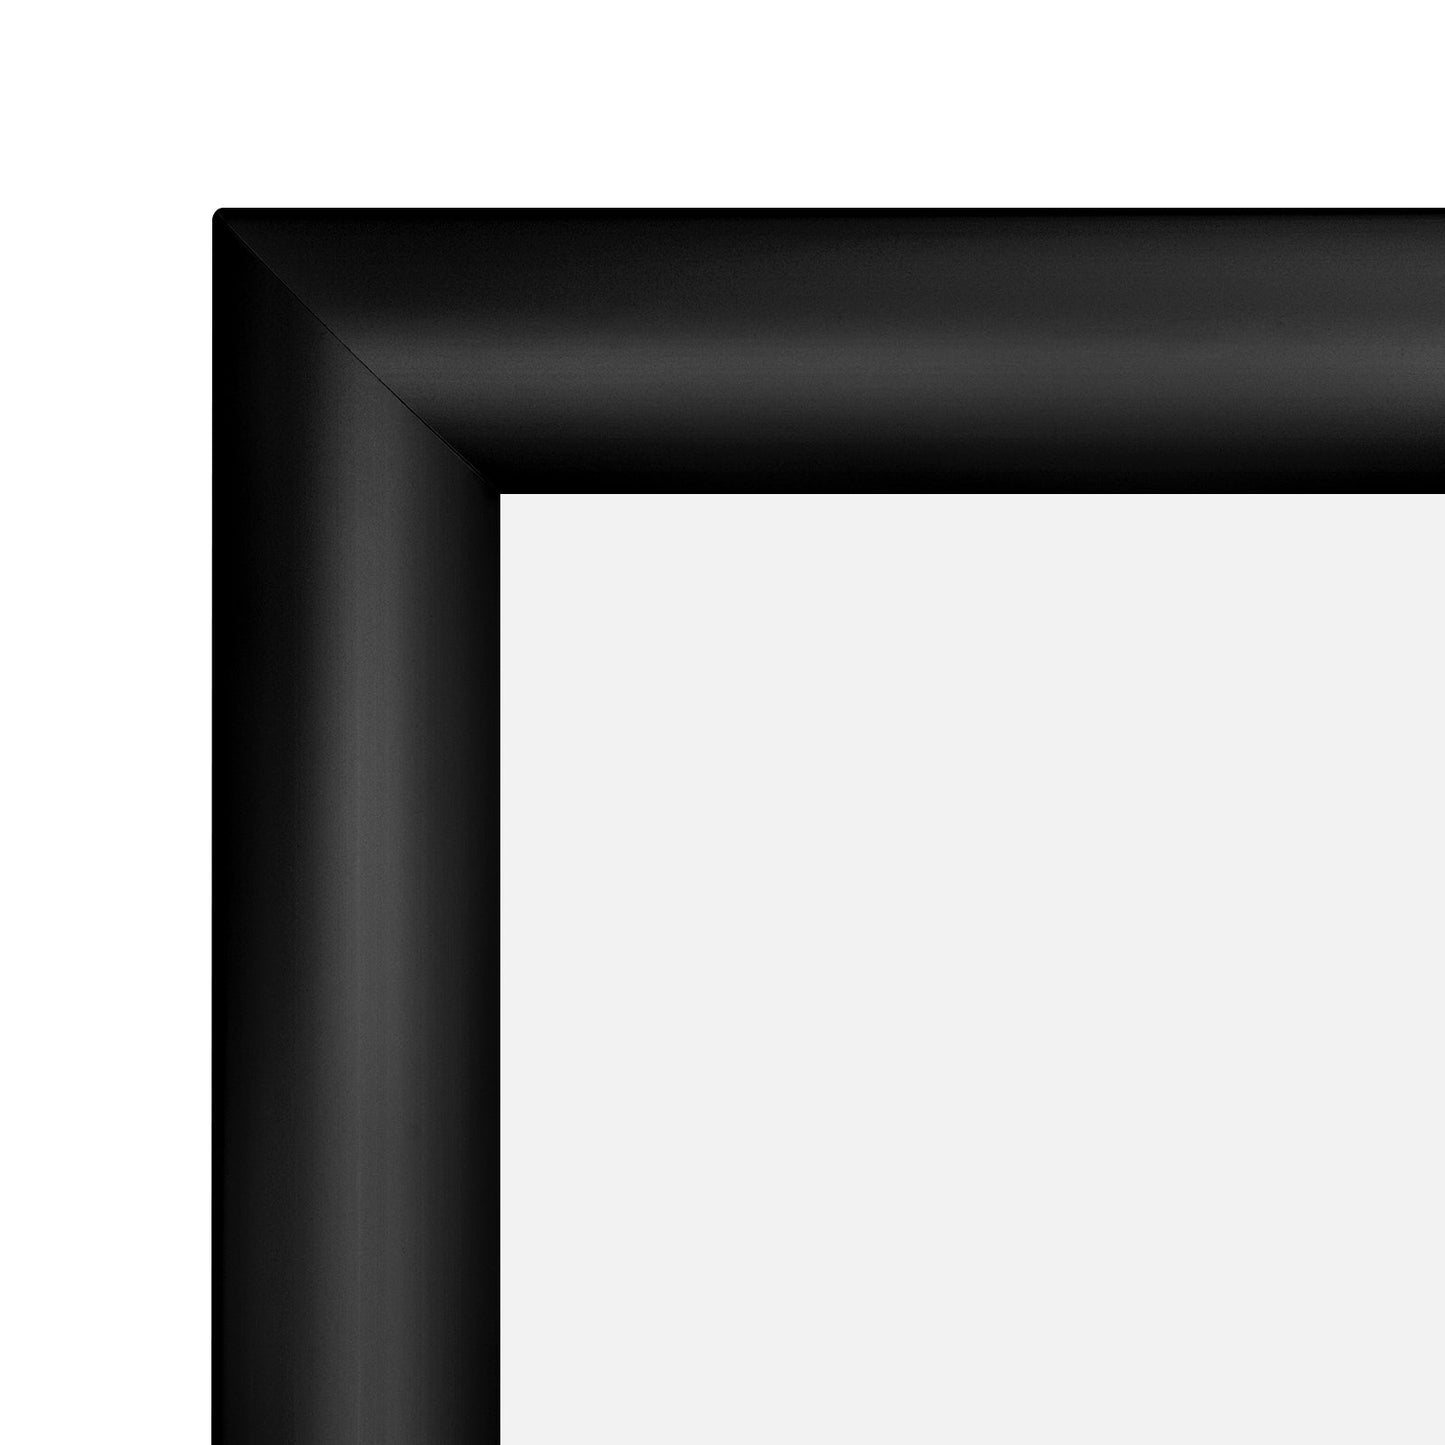 17x23 Black SnapeZo® Snap Frame - 1.2" Profile - Snap Frames Direct